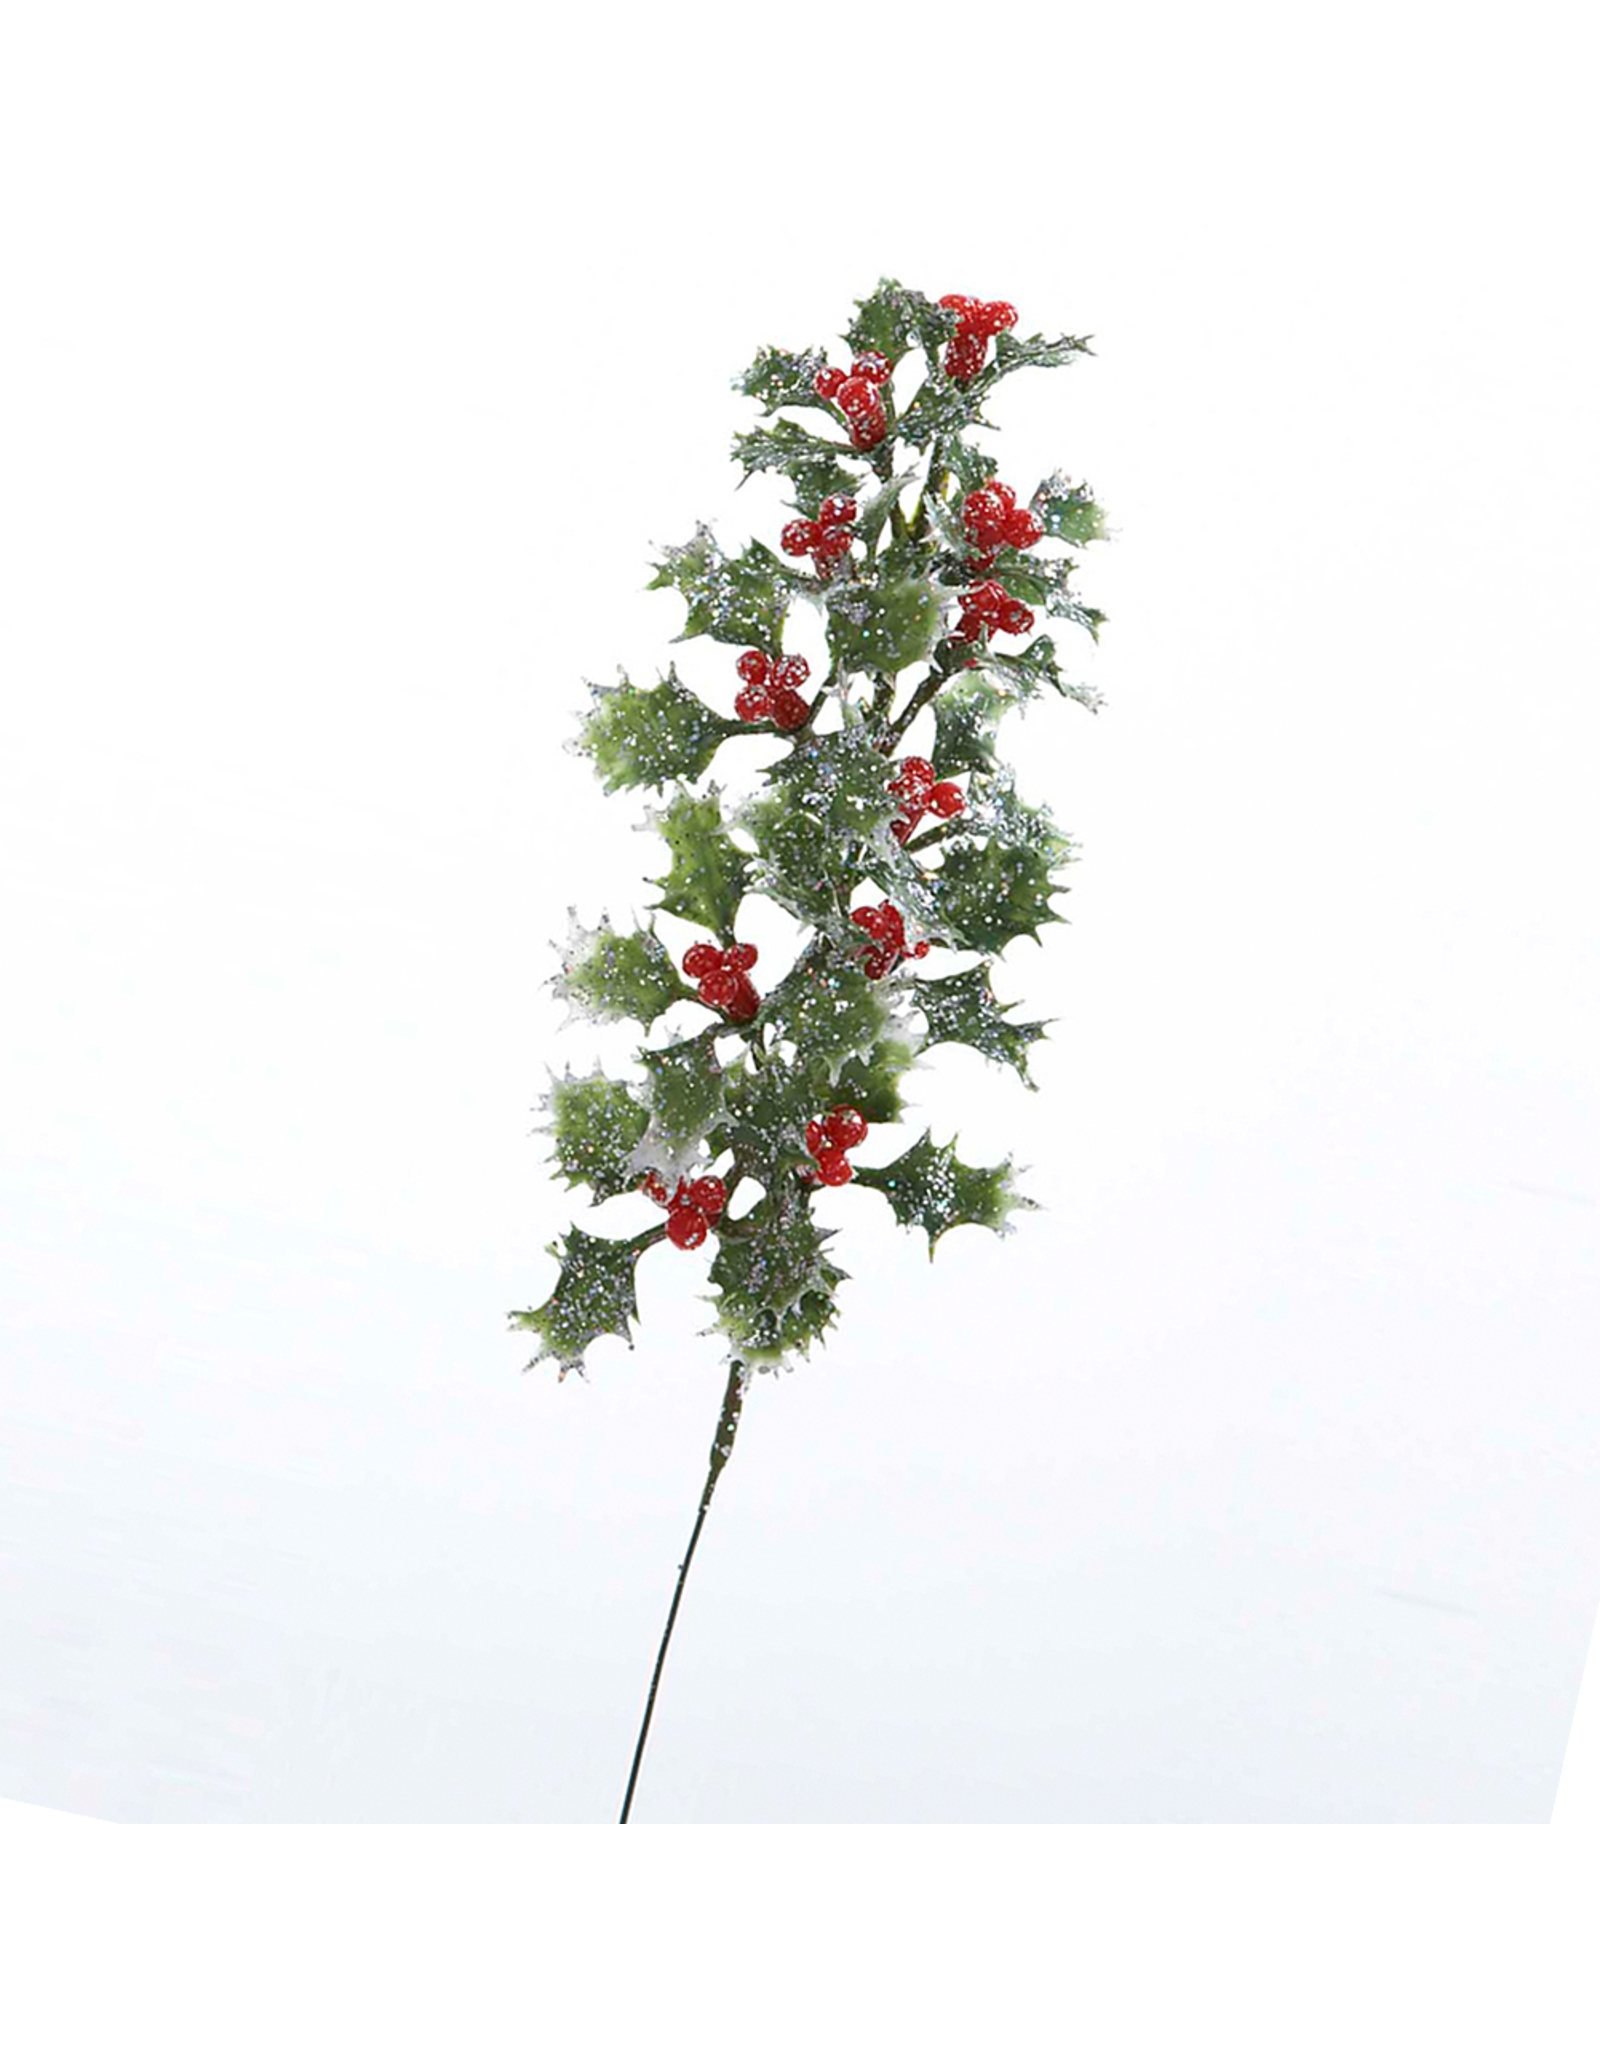 Kurt Adler Mini Holly Spray Pick 3 inch Christmas Flowers Floral Decor